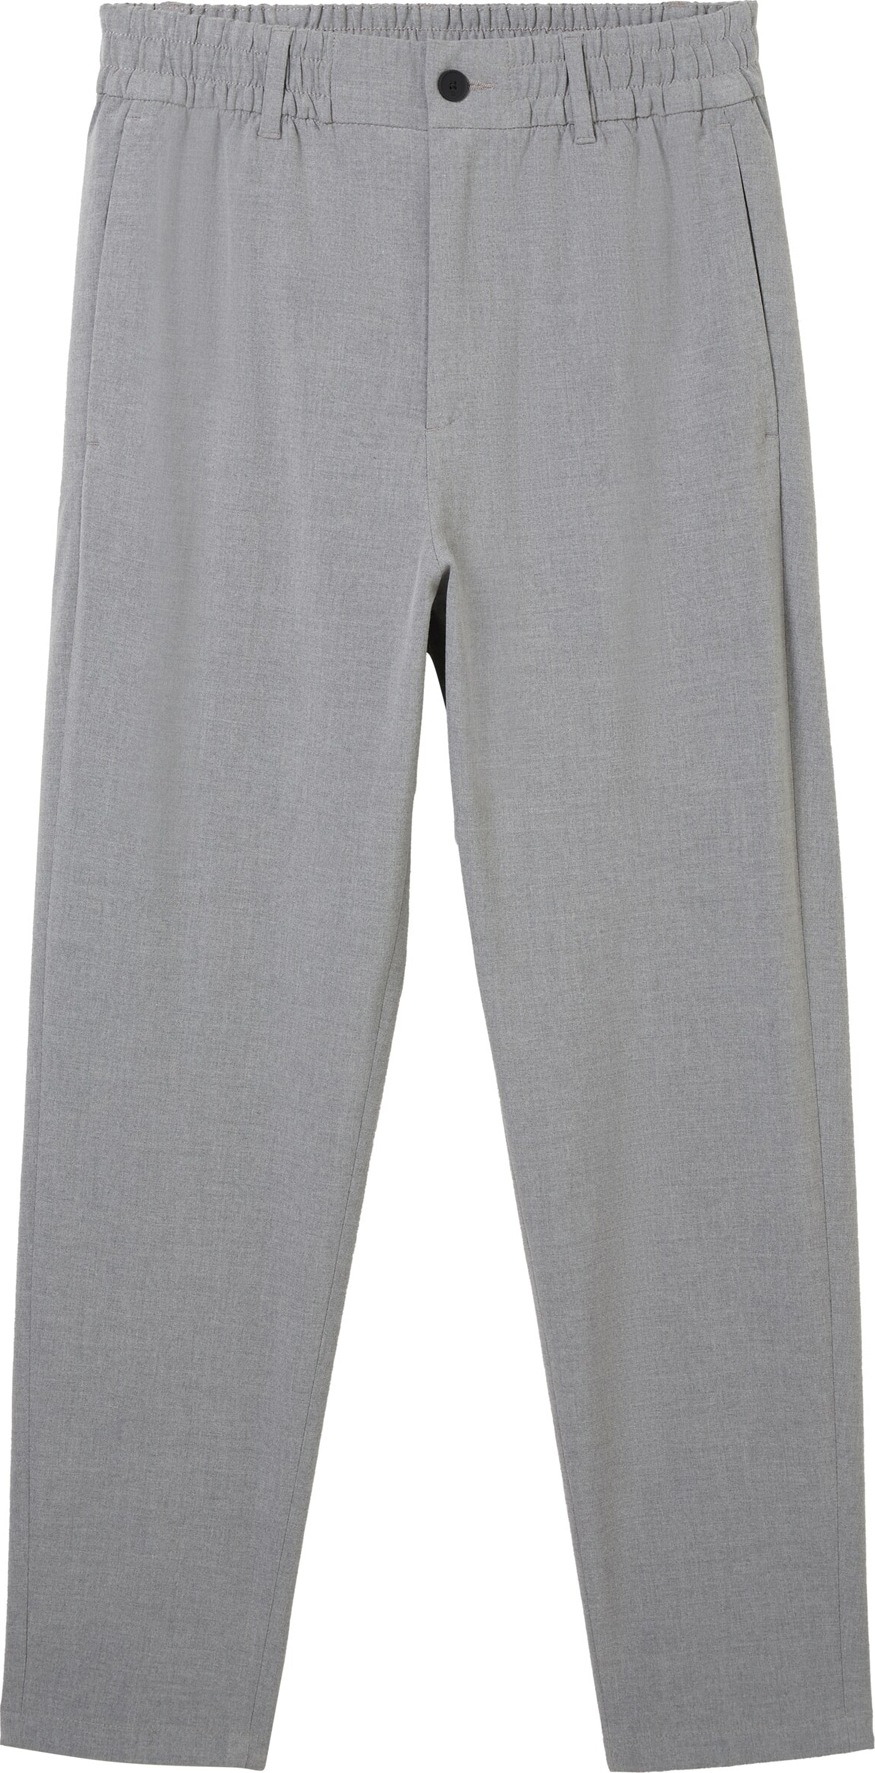 Kalhoty s puky Tom Tailor Denim šedý melír